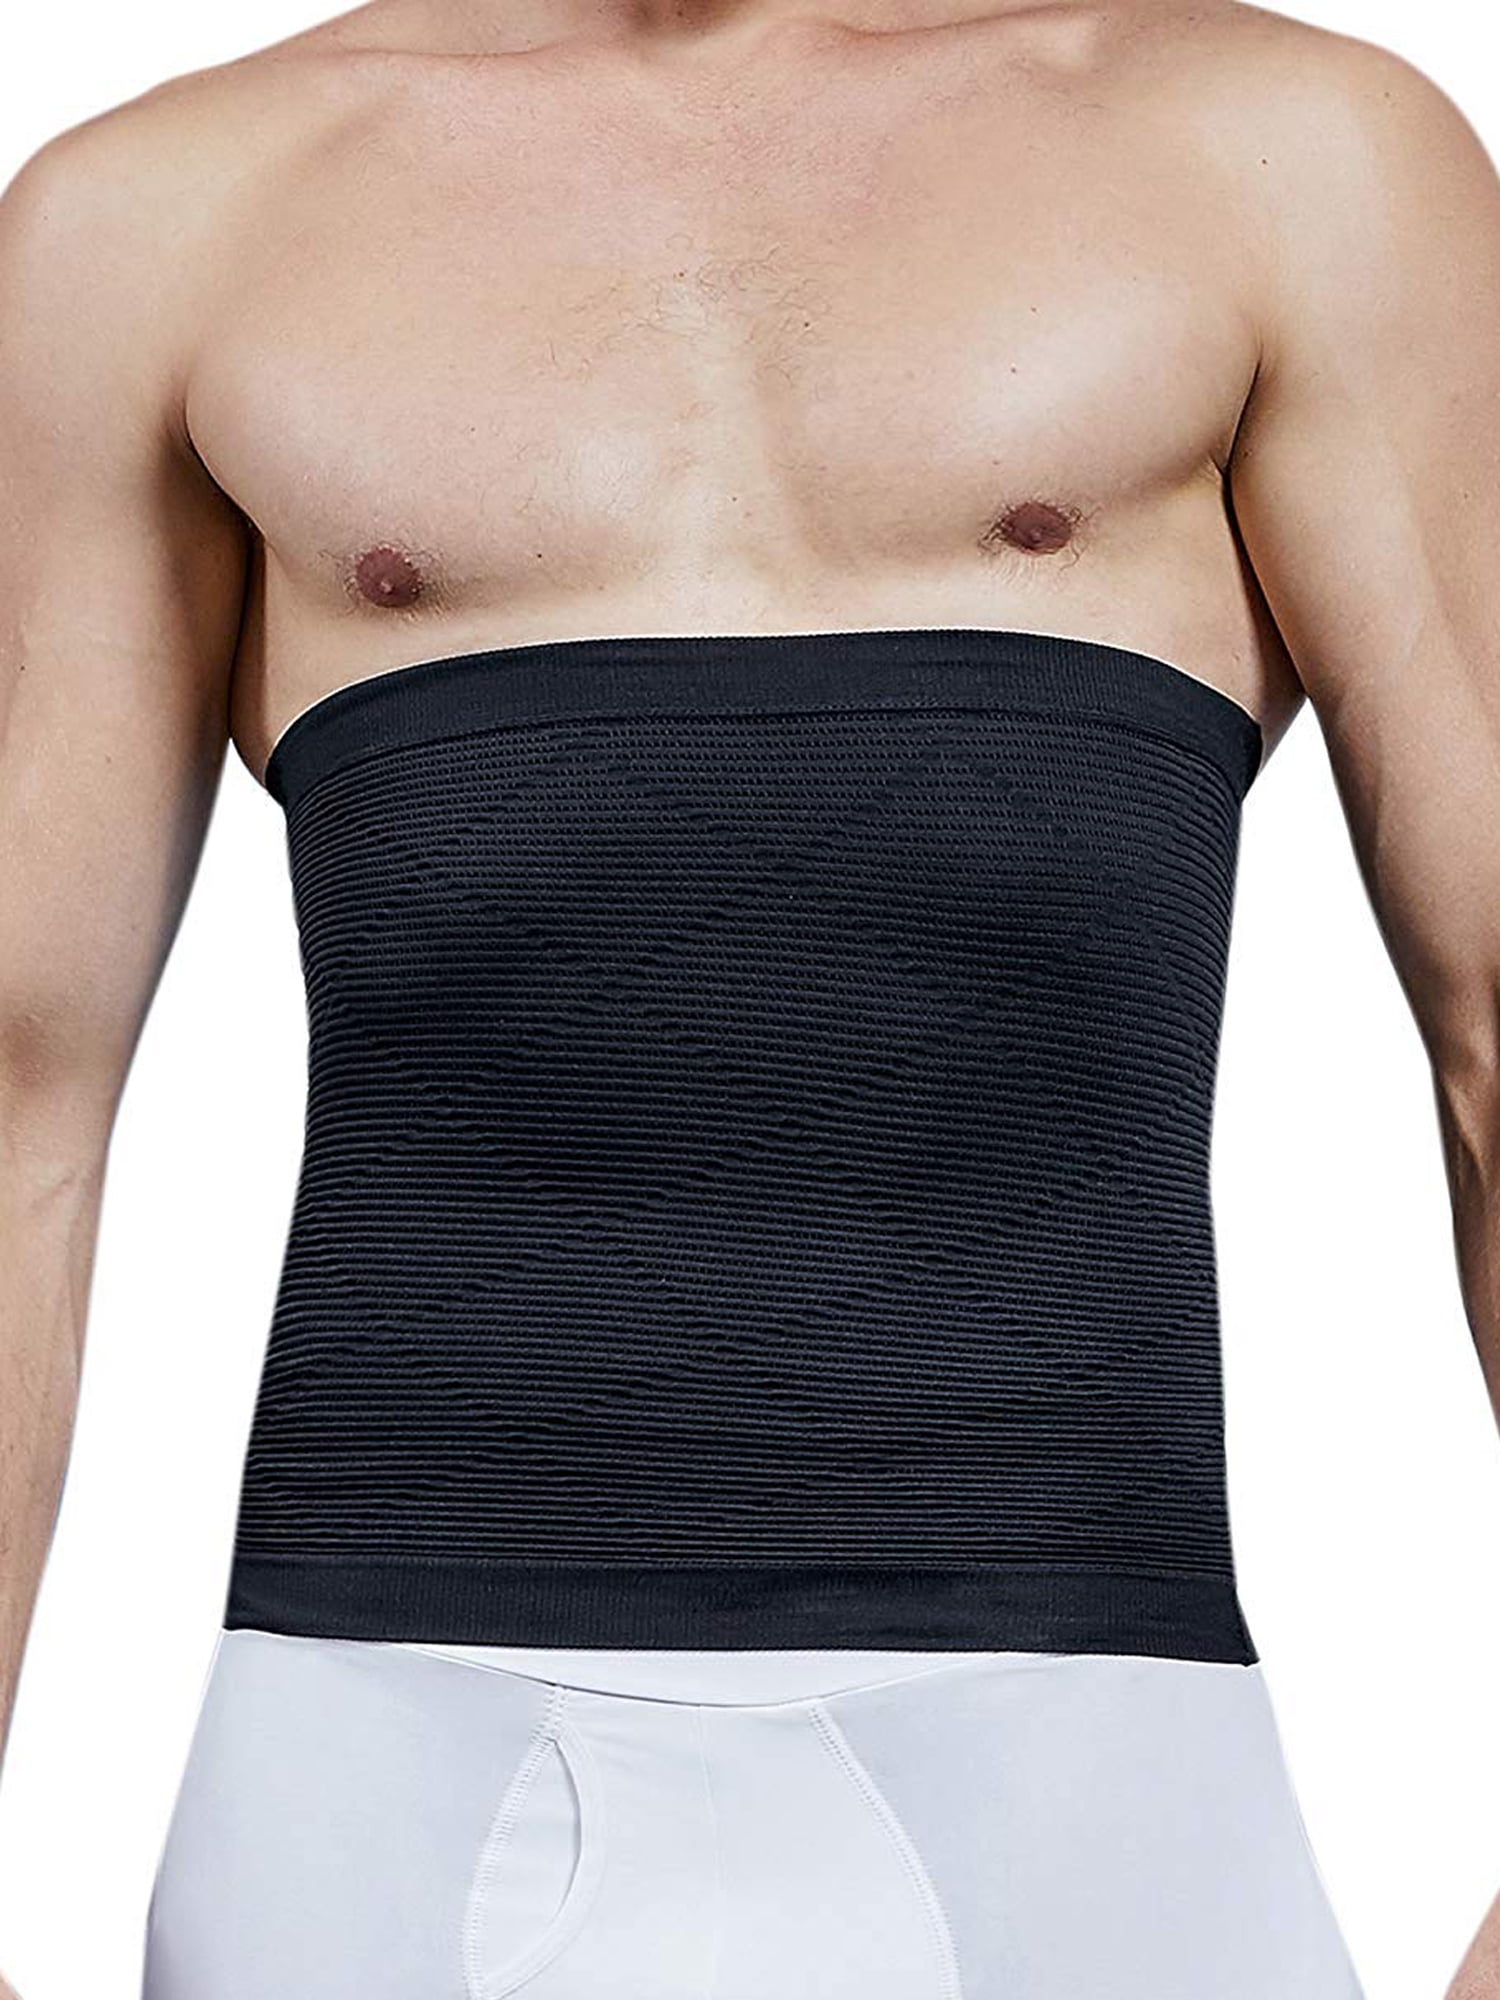 Unisex Hot Body Shaper Neoprene Slimming Belt Tummy Control Shapewear, Stomach  Fat Burner, Best Abdominal Trainer